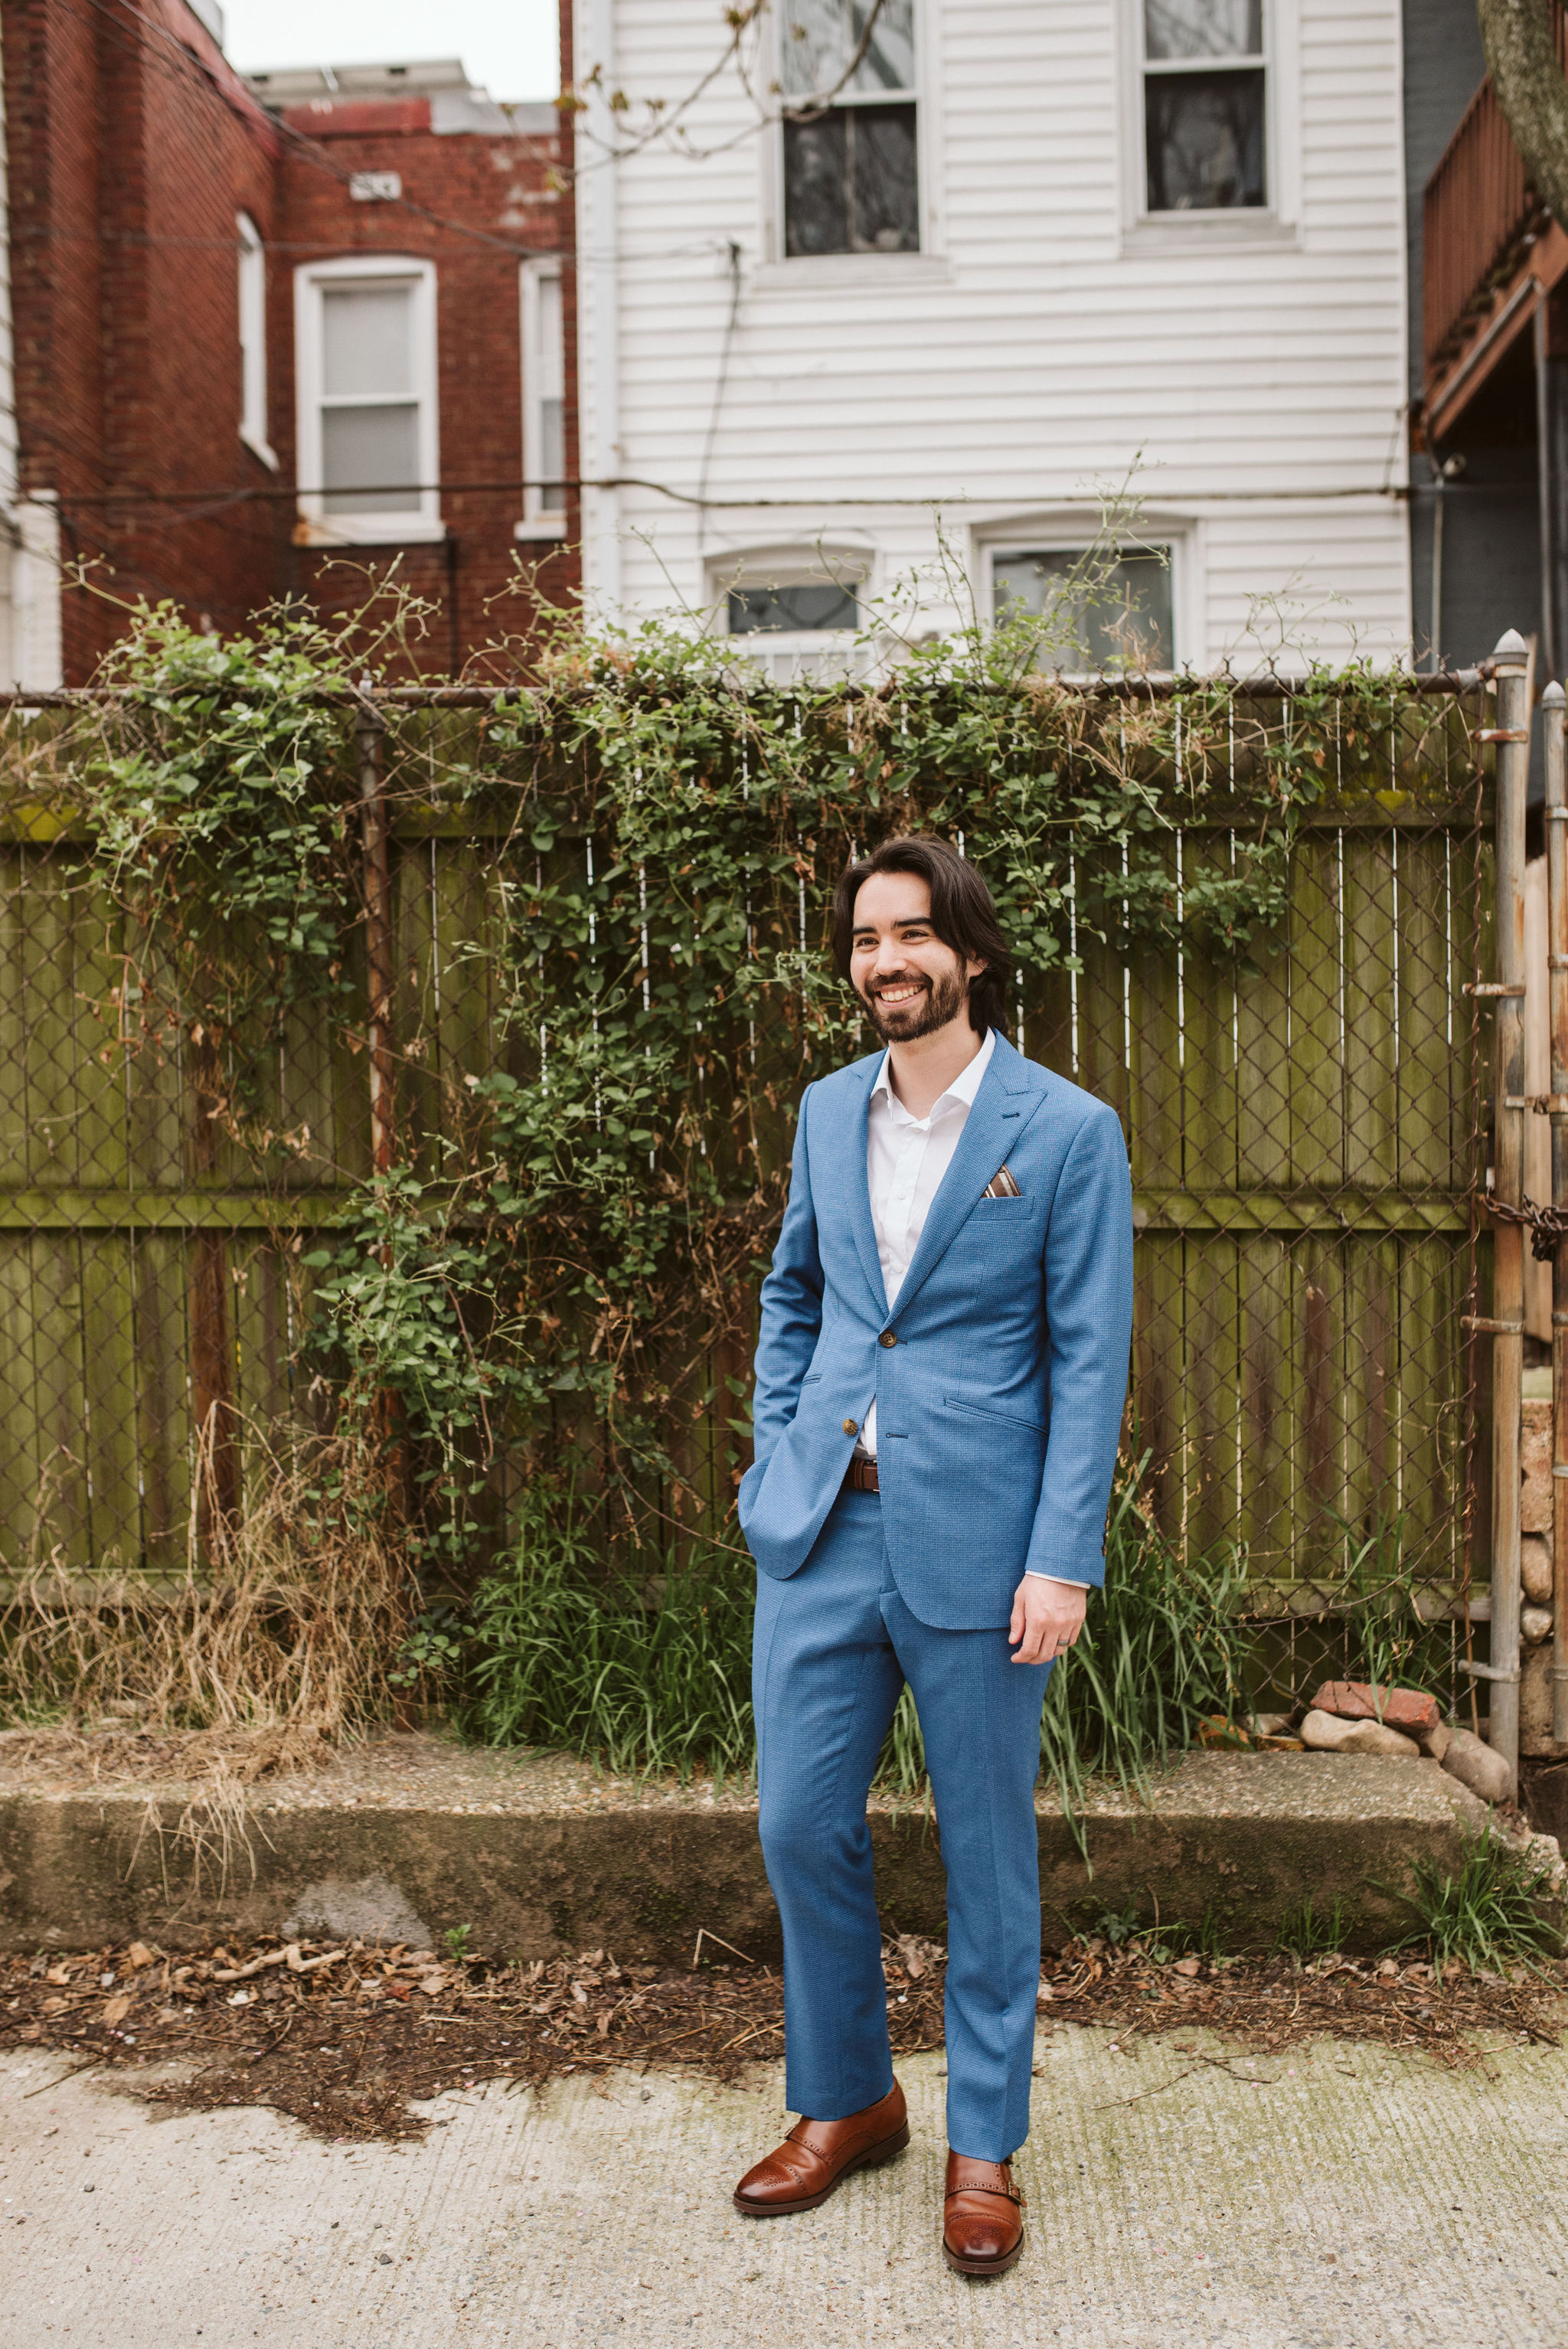  Washington DC, Baltimore Wedding Photographer, Intimate Wedding, Traditional, Classic, Palestinian, Portrait of Groom on City Street, Blue Suit 